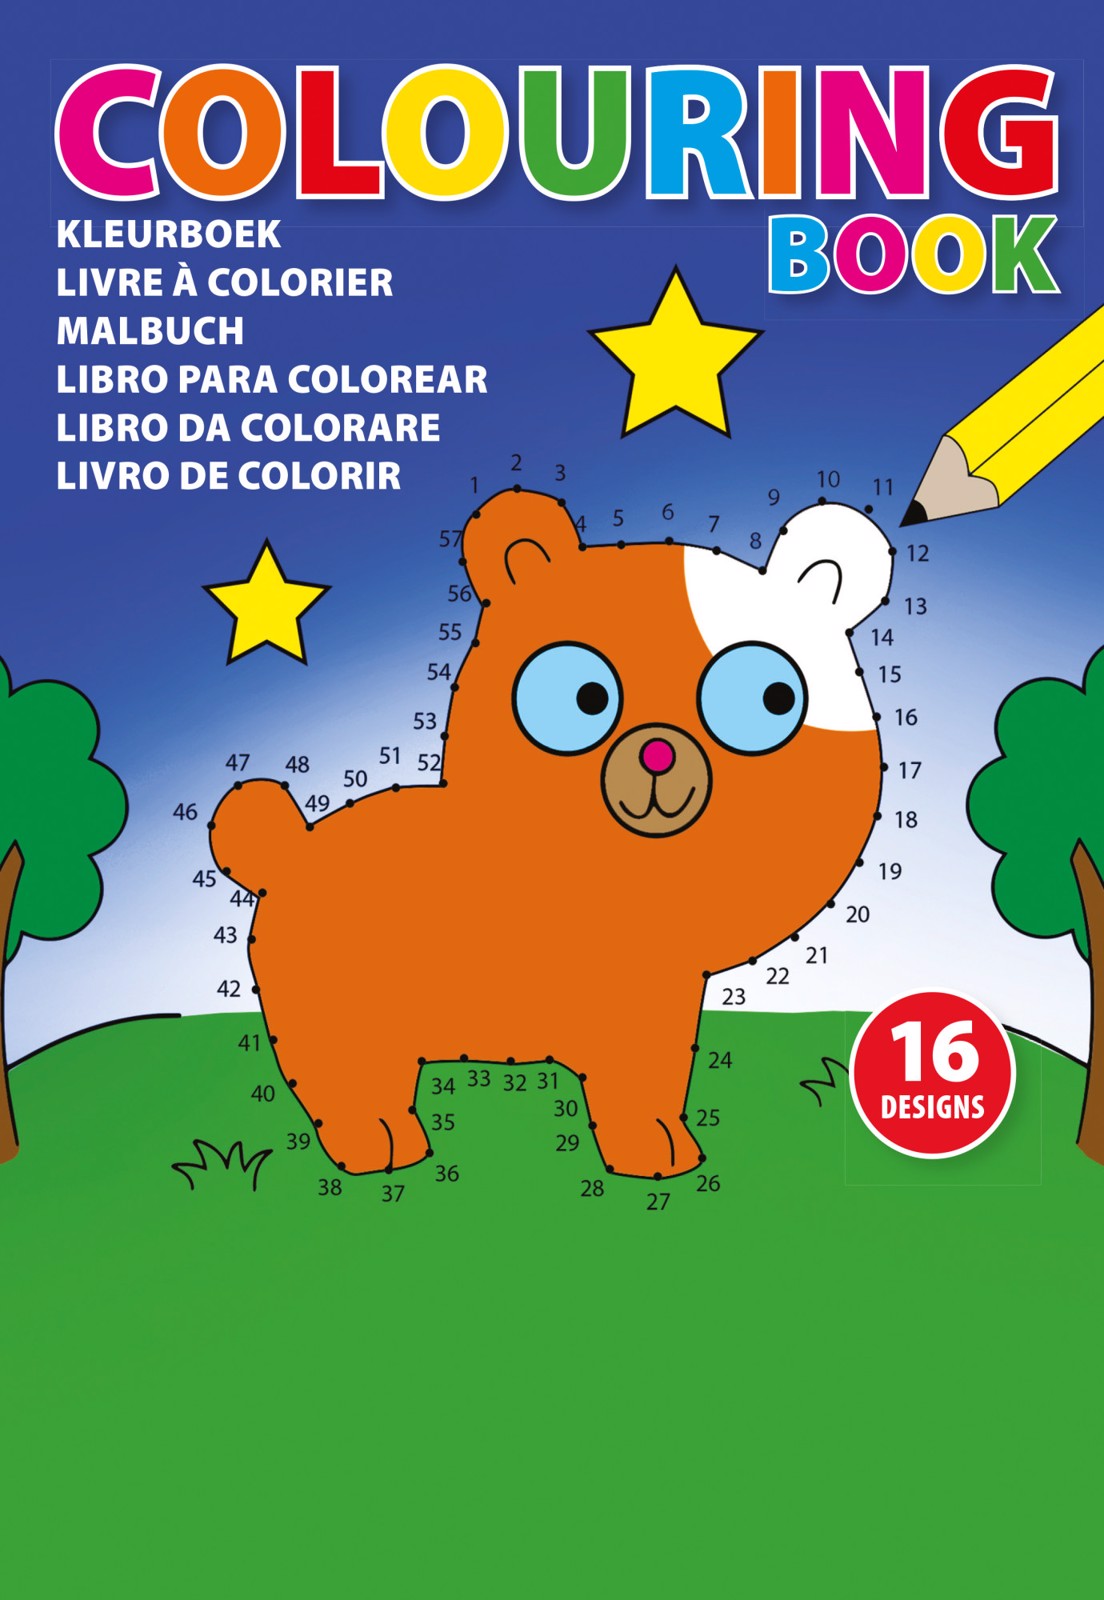 Cardboard colouring book